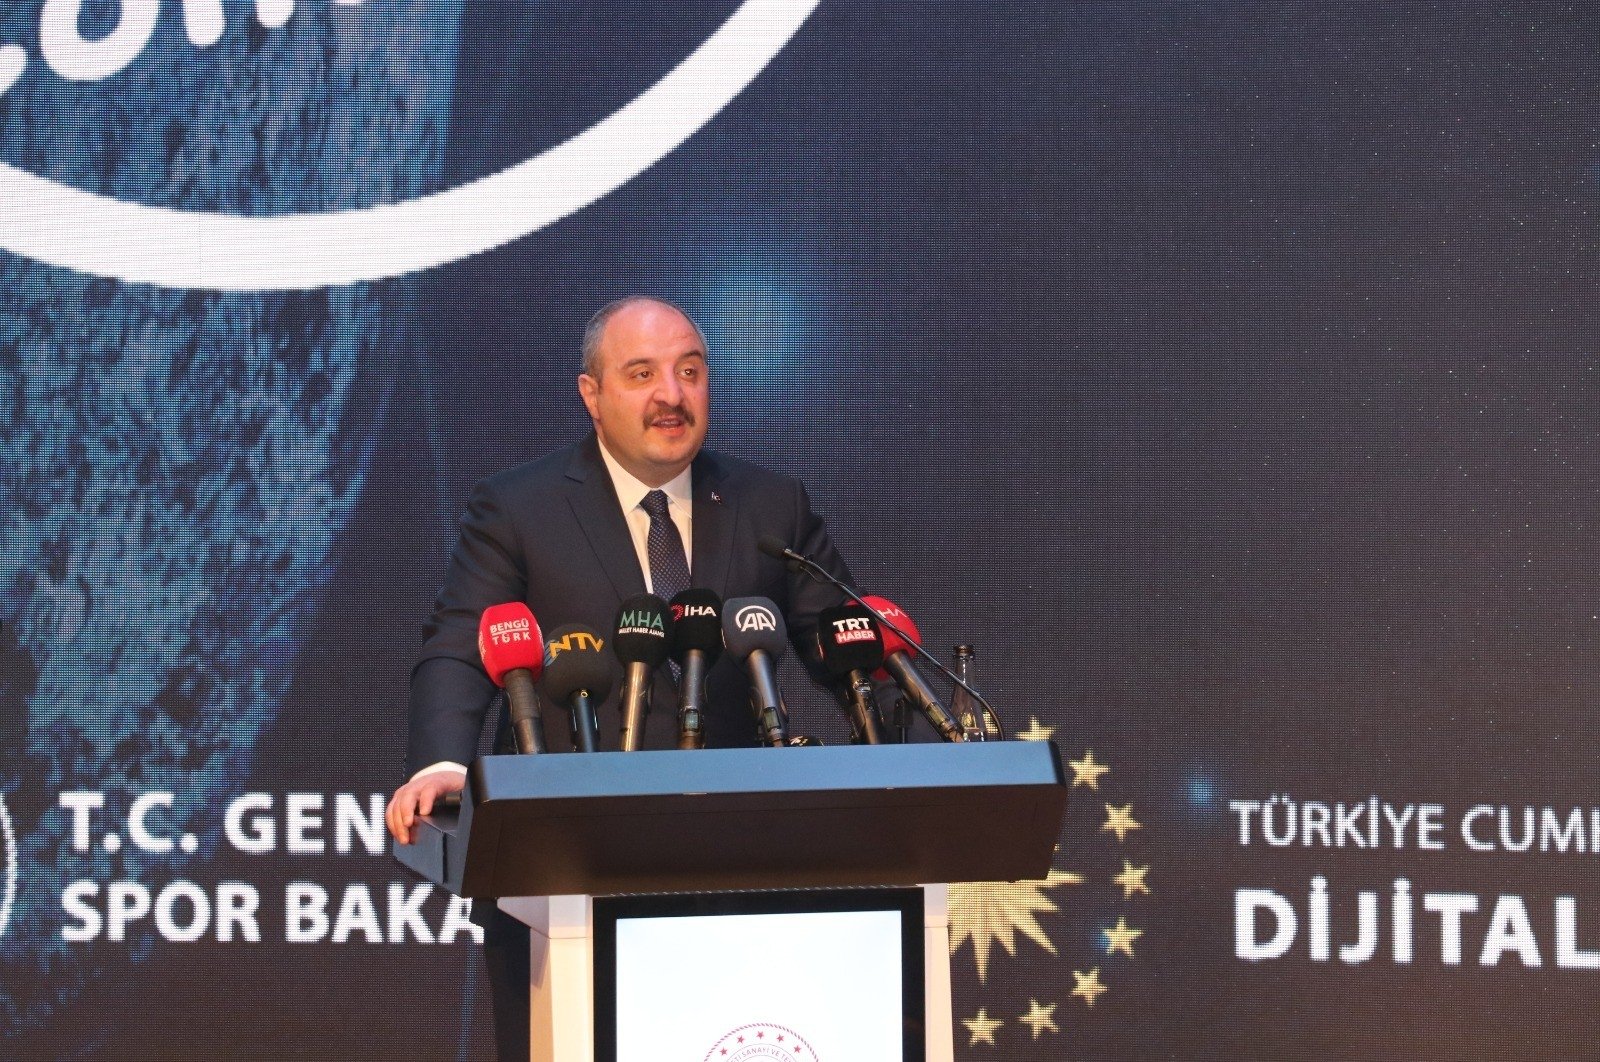 Festival pemuda dimulai di Ankara dengan fokus pada pengembangan teknologi